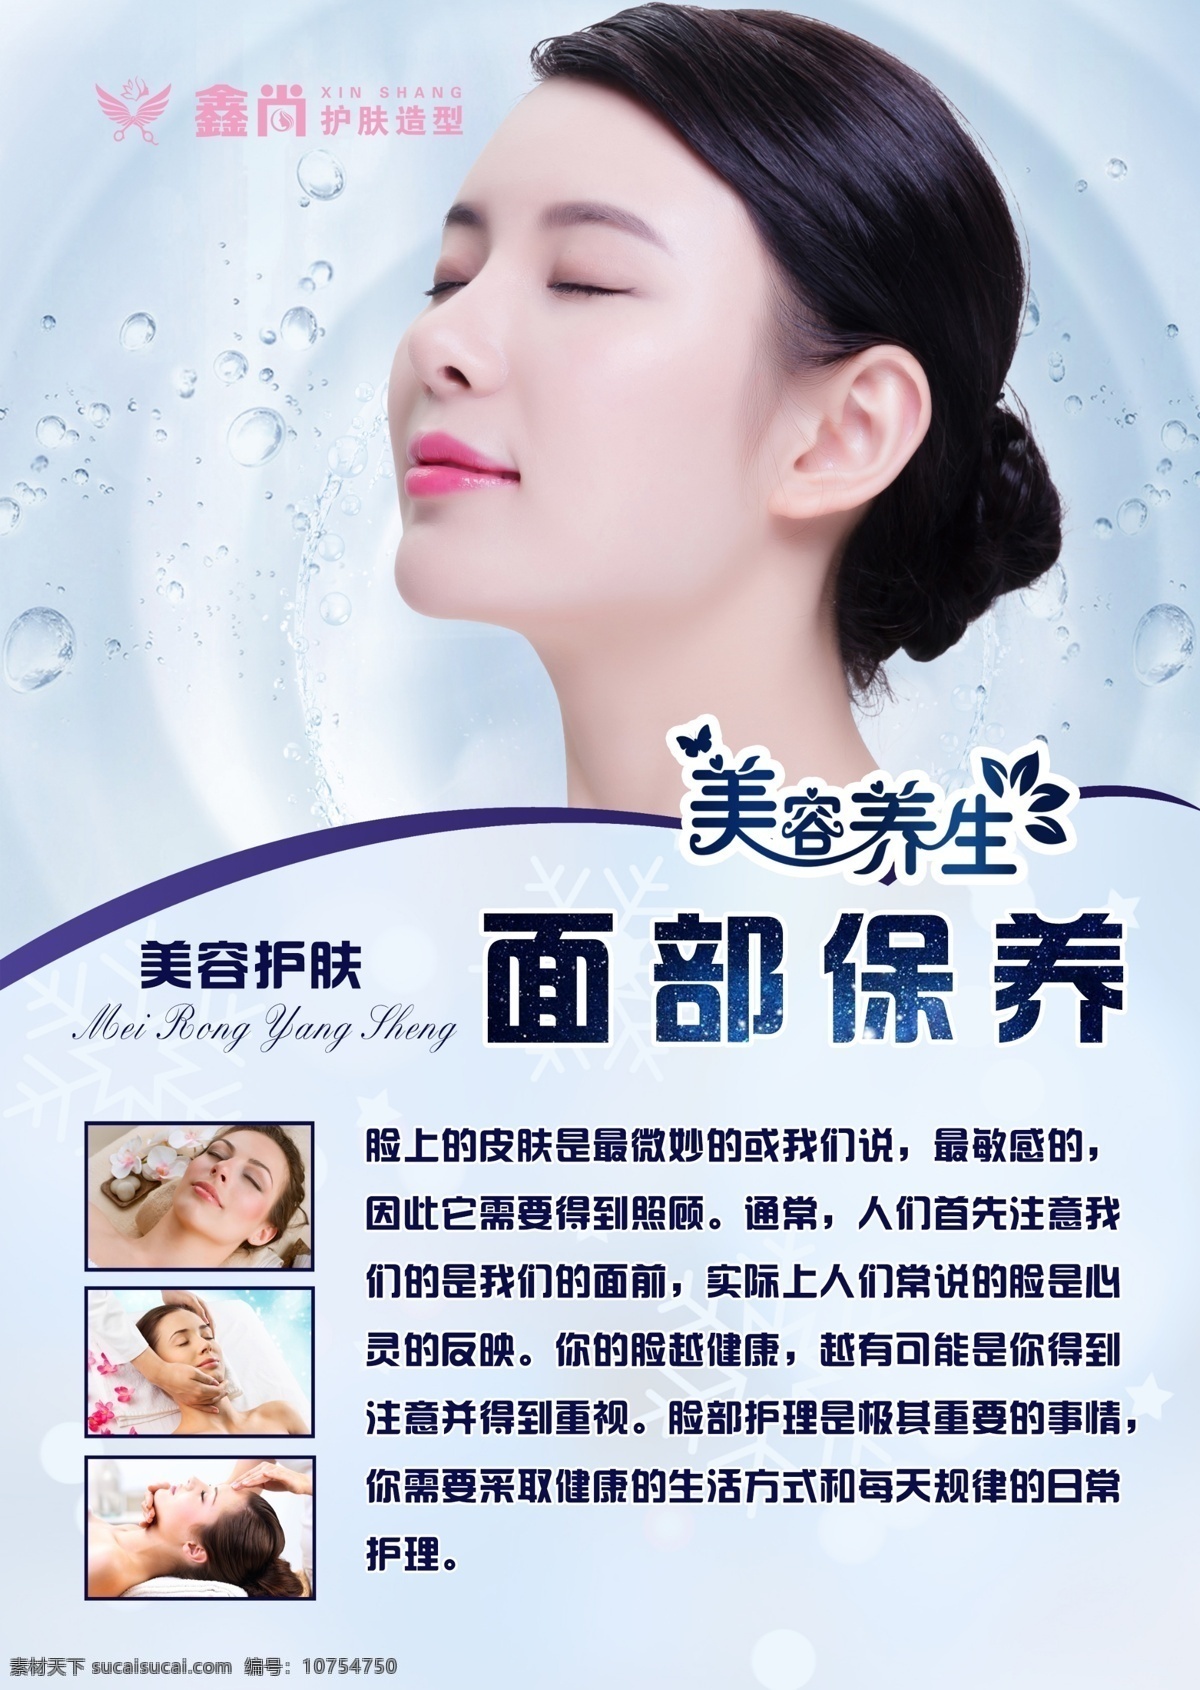 Channel韩国皮肤管理培训课程与国内传统美容的区别 | Wassup Apgujeong Korean Skin Care Reviews